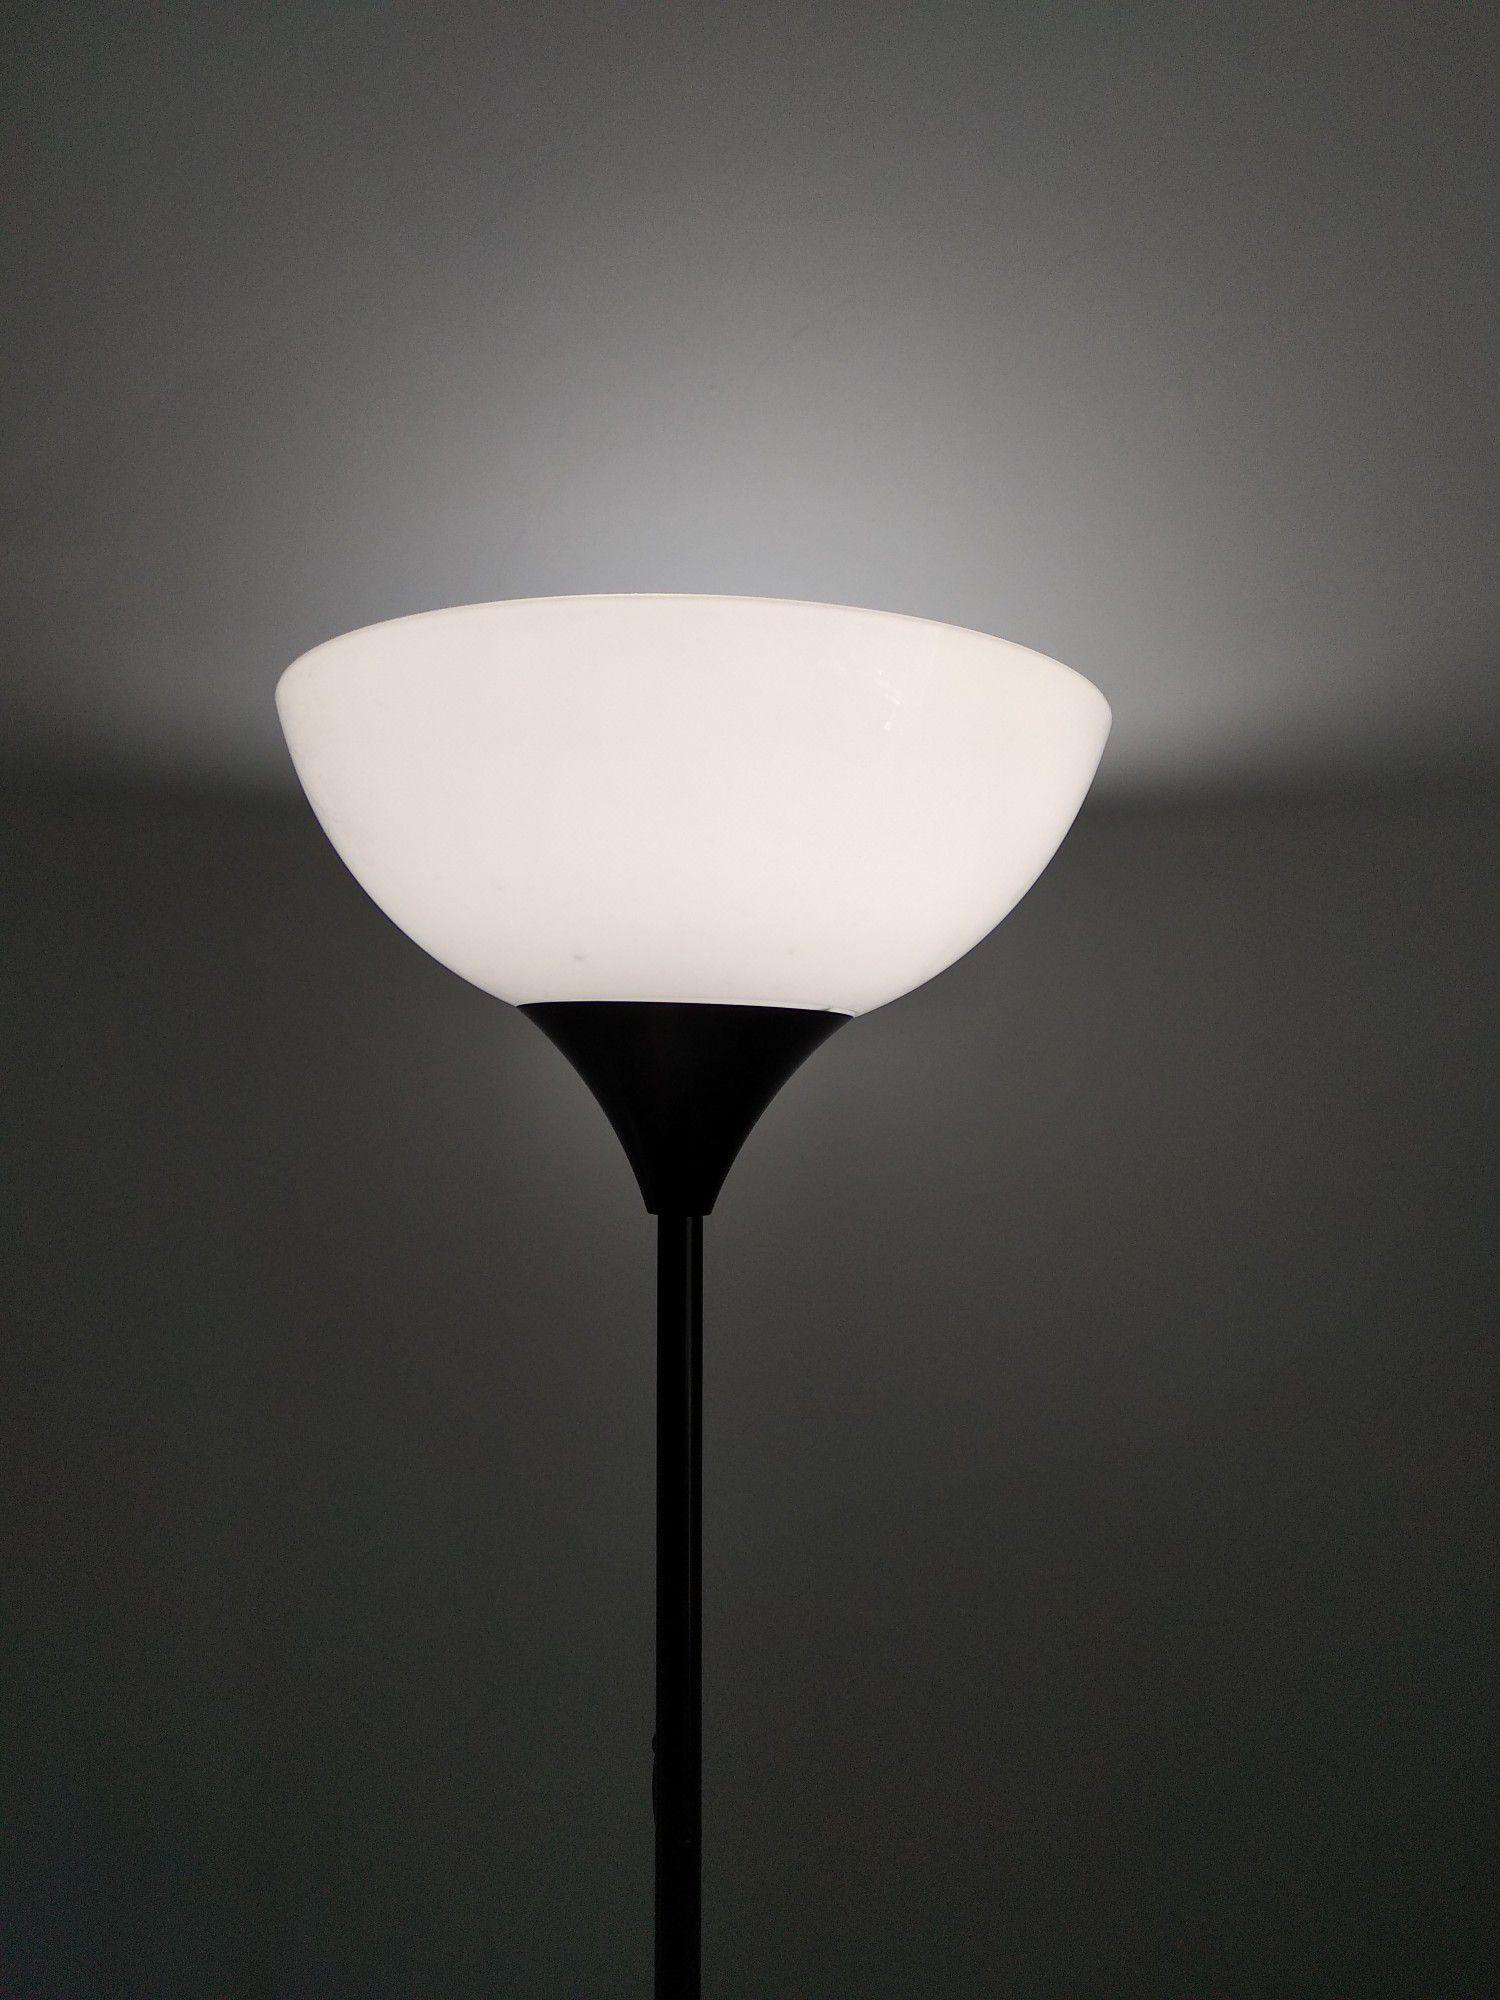 Ikea floor lamp, bulb included